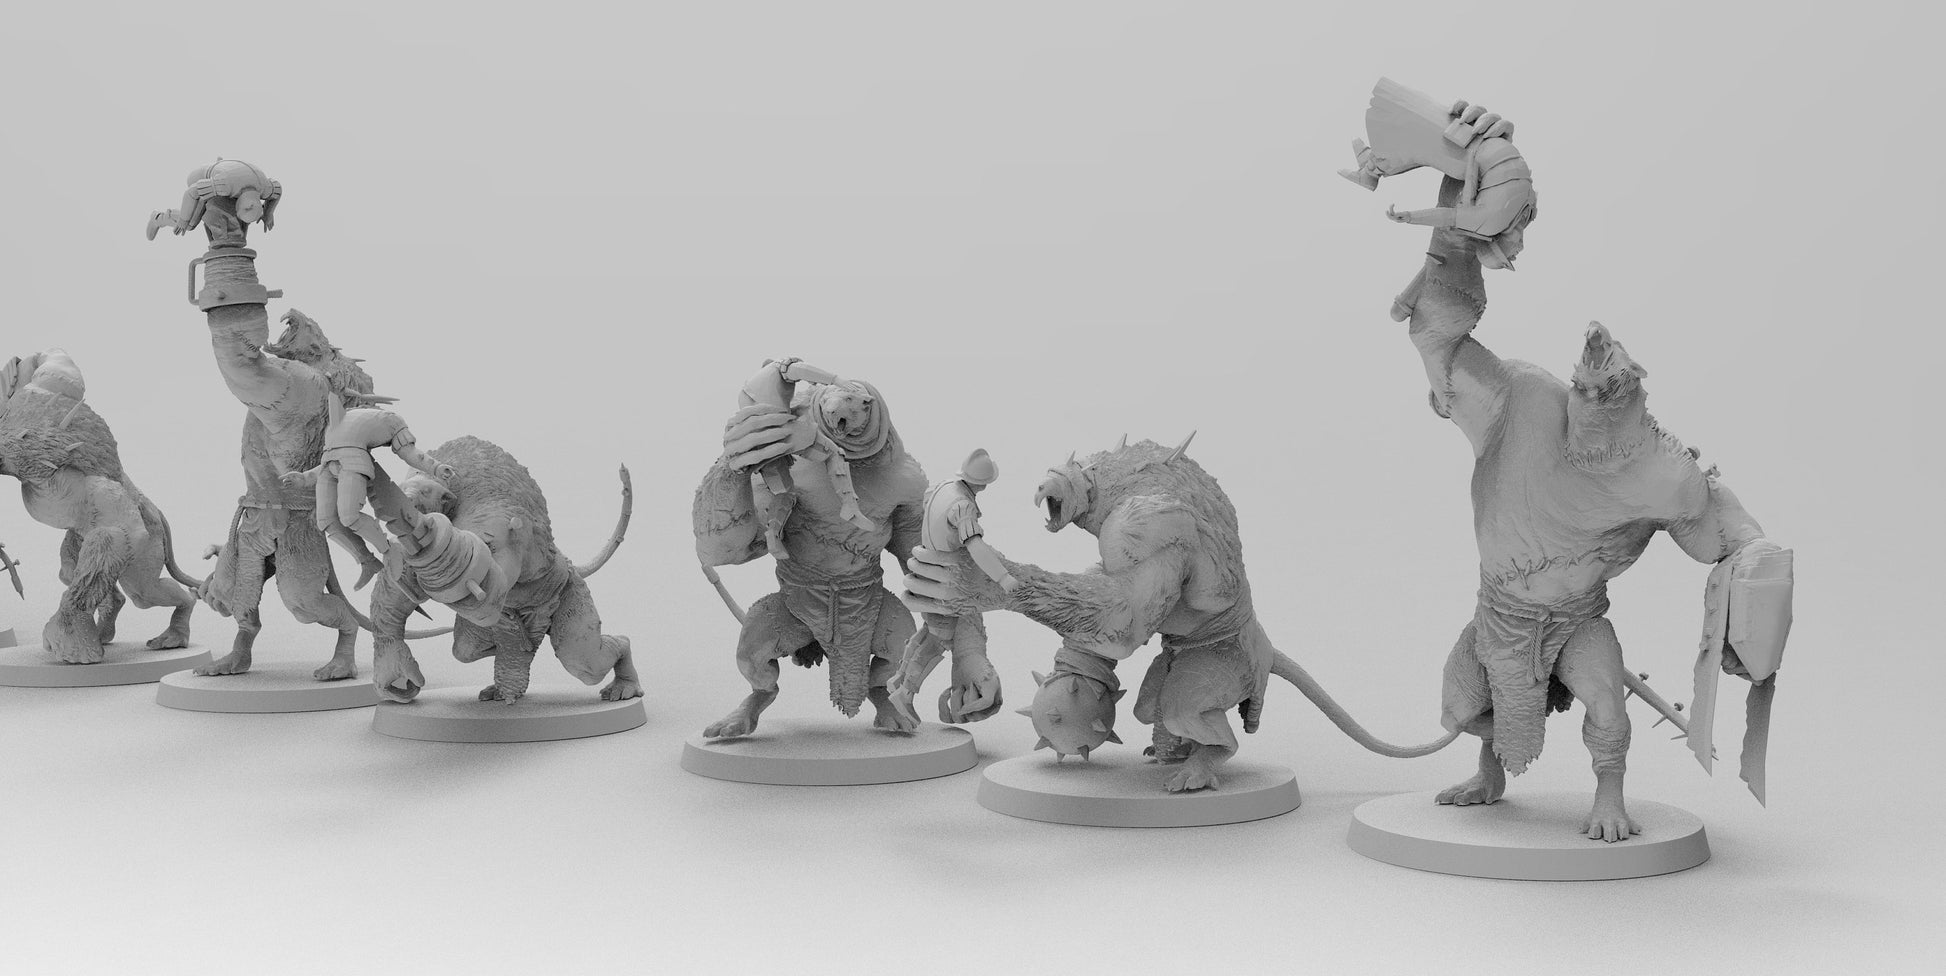 Ratmen Ogres | Many Poses | Ratmen | Resin 3D Printed Miniatures | EmanG | Table Top Gaming | RPG | D&D | Pathfinder